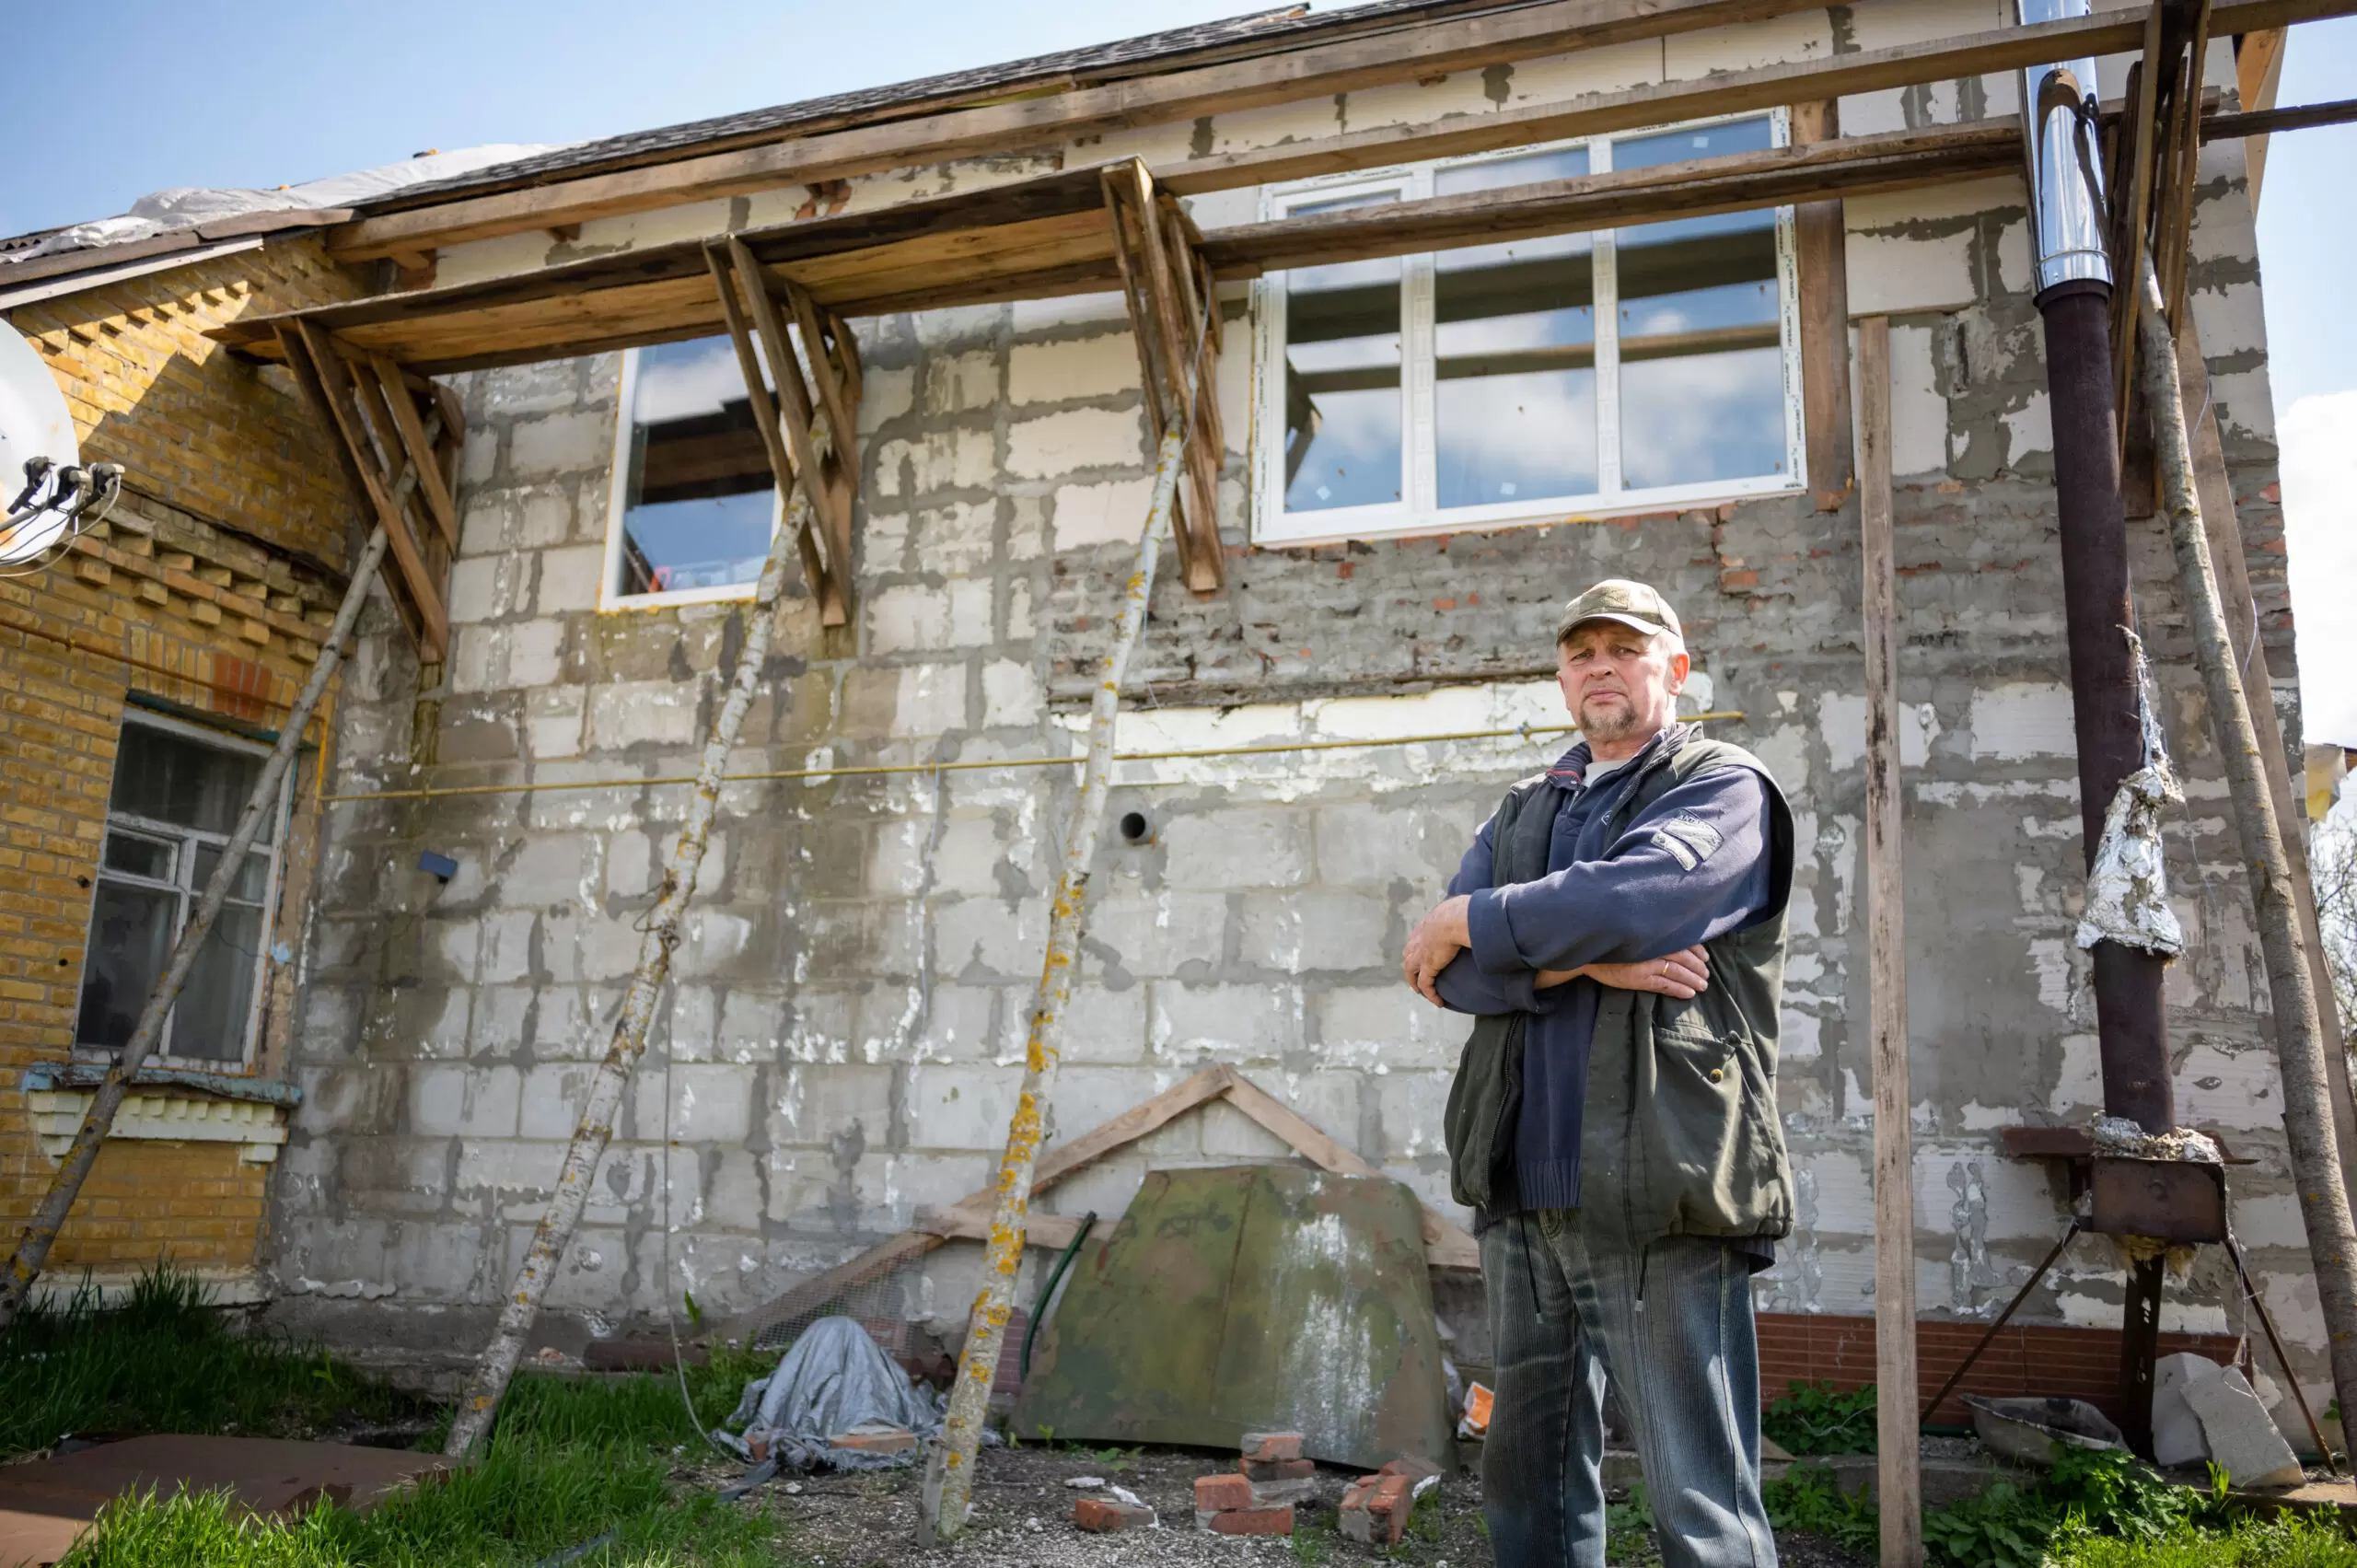 Restoration of Ukraine: Rebuilding the Country Through Humanitarian Aid